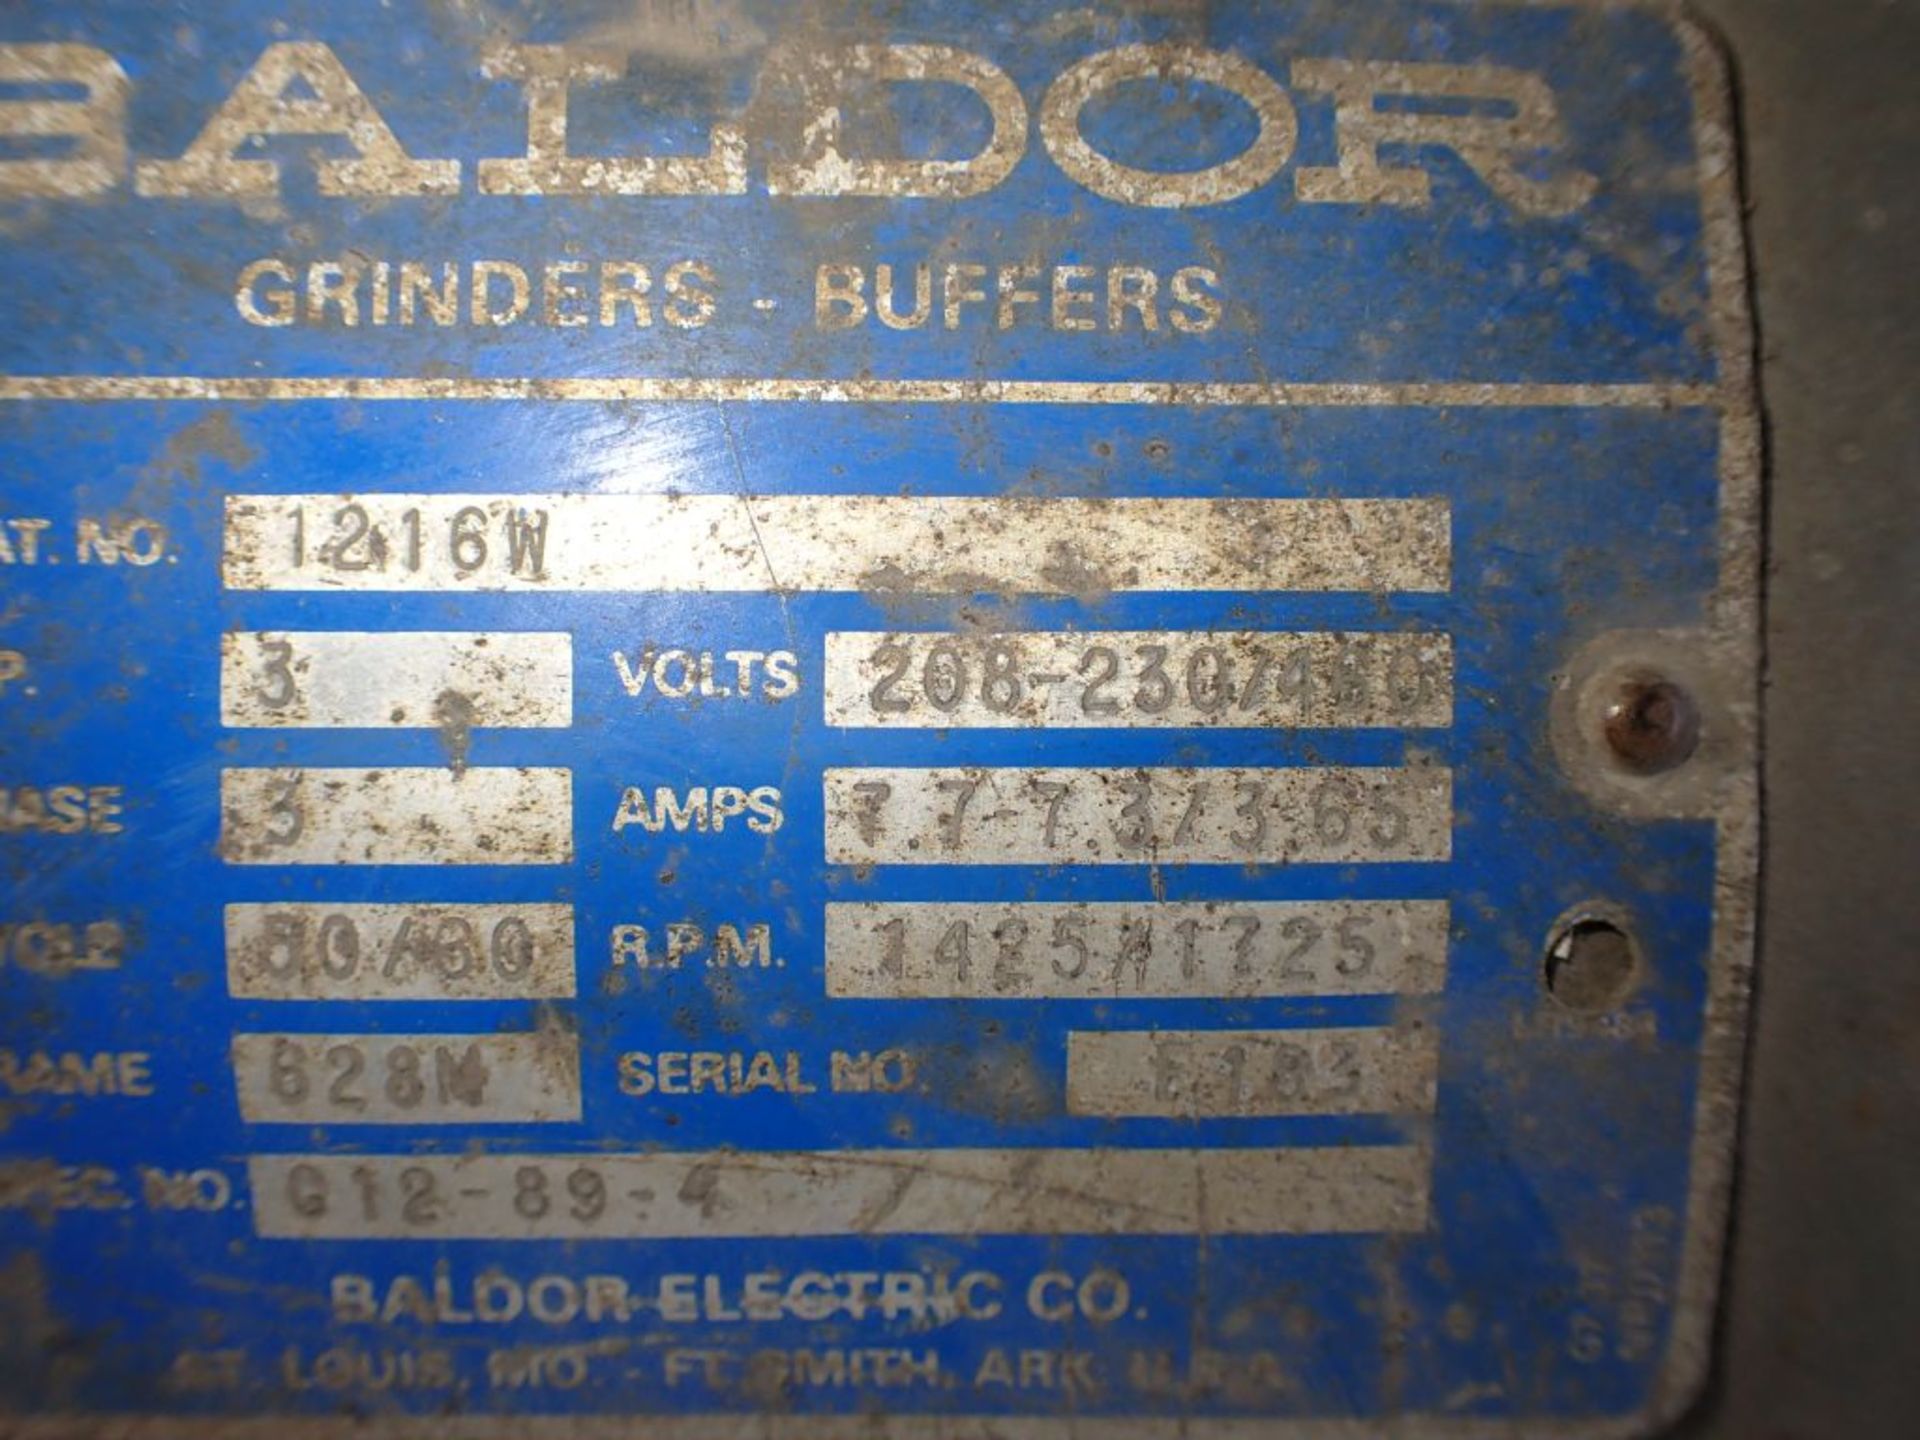 Baldor Grindust Buffers | Cat No. 1316M; 3 HP; 208-230V; 1425 RPM; Frame: 628N; 3PH - Image 7 of 7